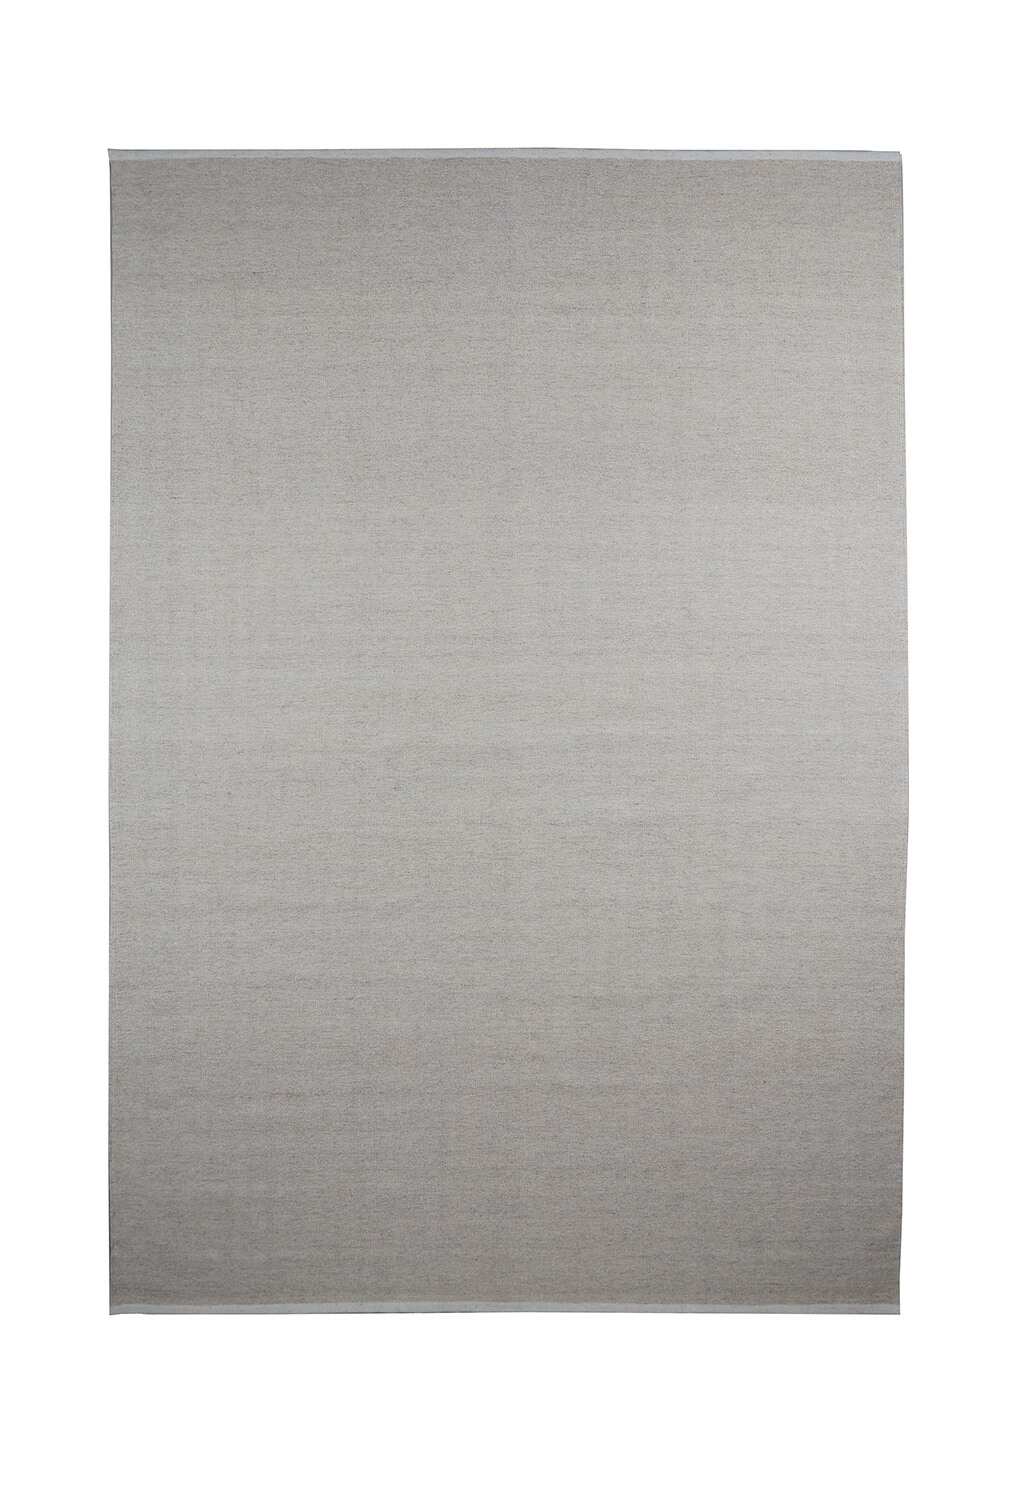 Escape Kelim Teppich mit Nähten, 170 x 240 cm, stone